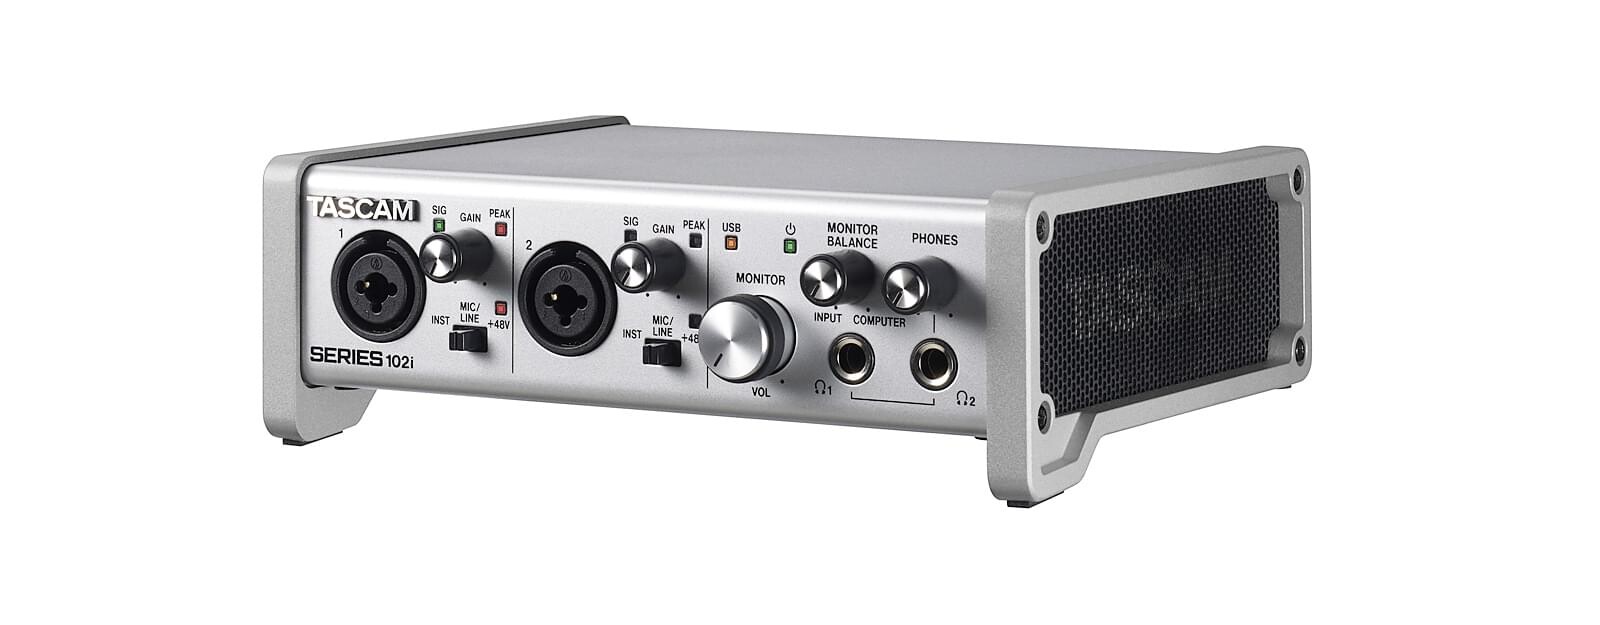 Tascam-SERIES-102i-USB-Audio-MIDI-Interface-mit-DSP-Mixer-10-Eingange-4-Ausgange